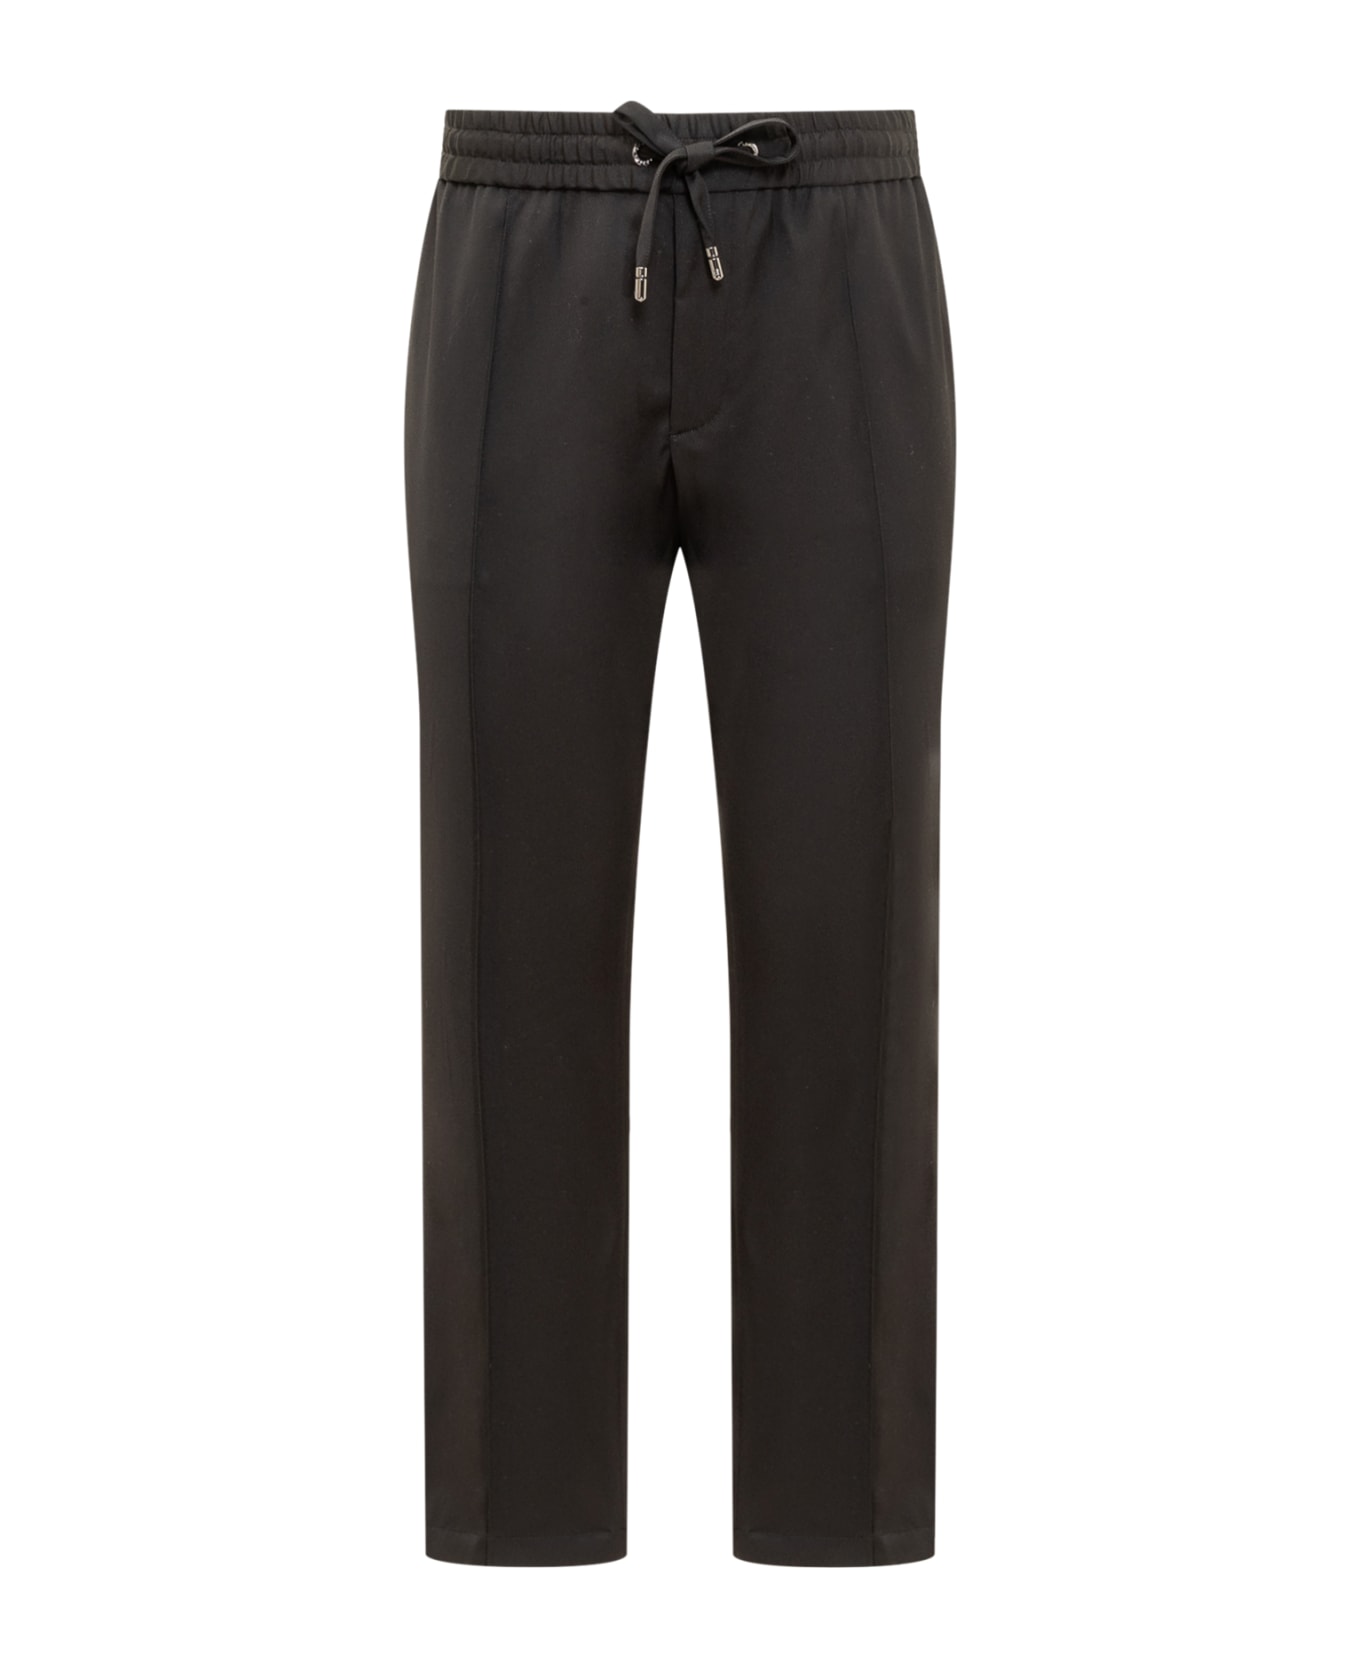 Dolce & Gabbana Tailored Trousers - NERO ボトムス